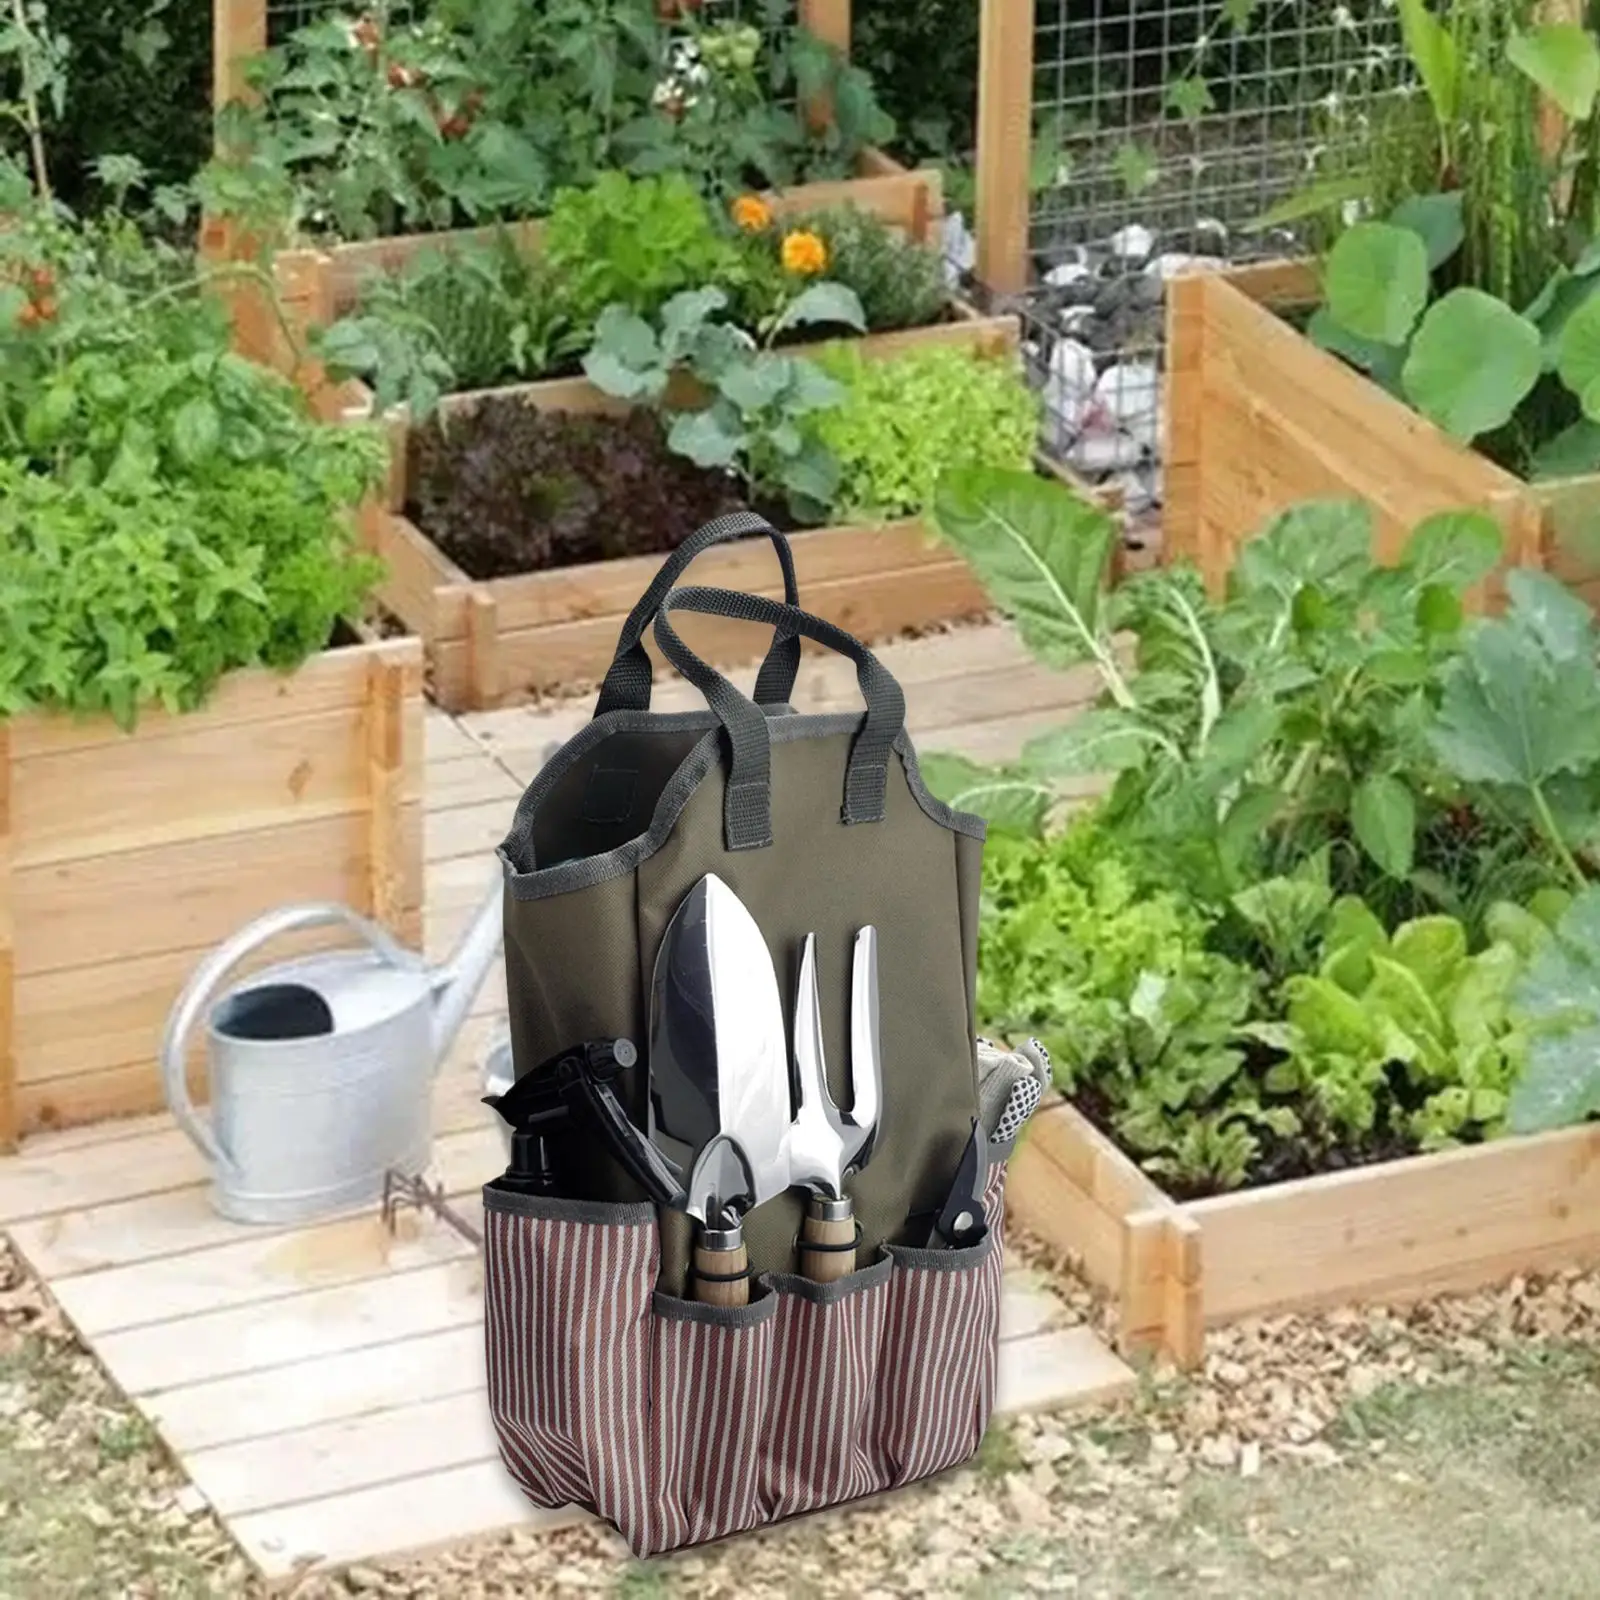 Garden Tote Storage Bag Large Portable Gardening Organizer Tote for